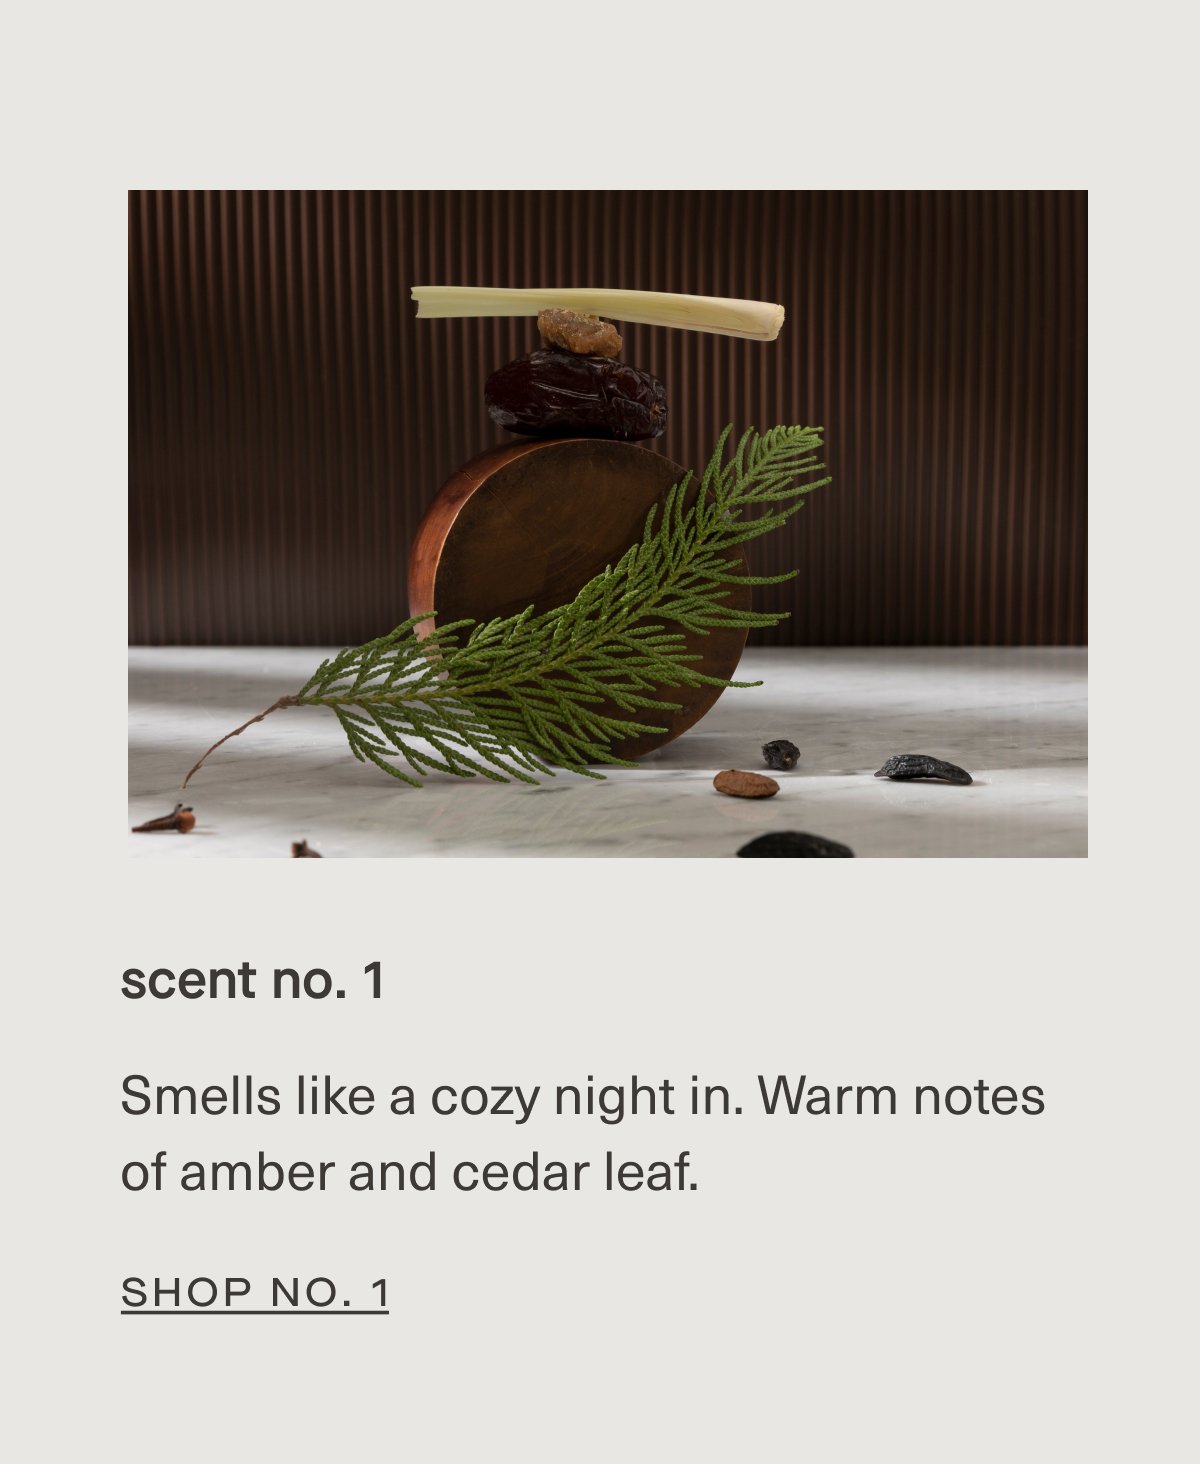 scent no. 1